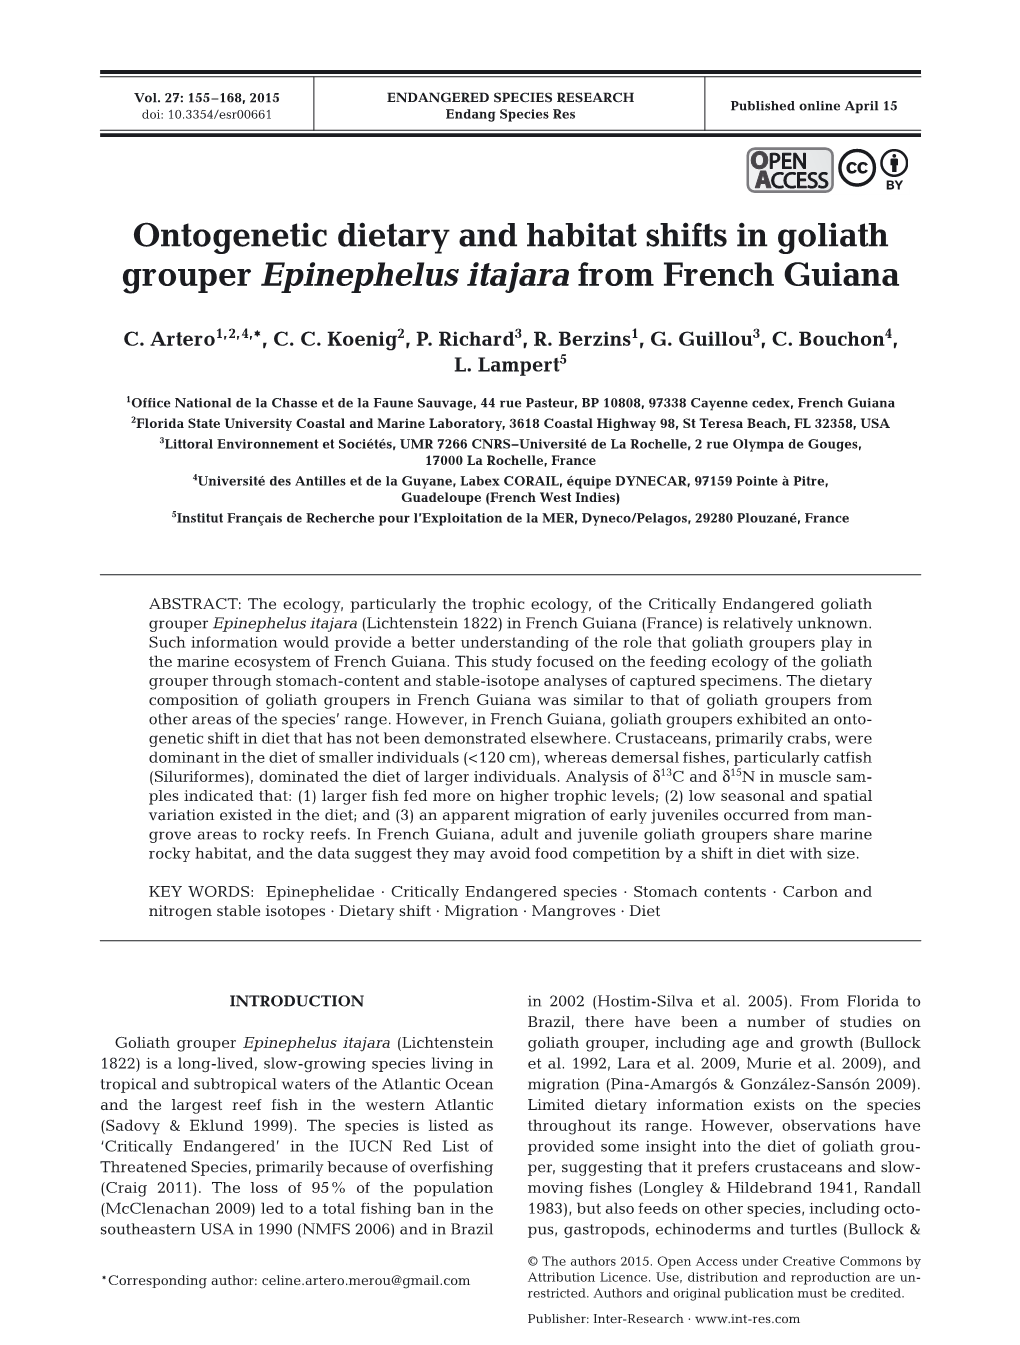 Ontogenetic Dietary and Habitat Shifts in Goliath Grouper Epinephelus Itajara from French Guiana